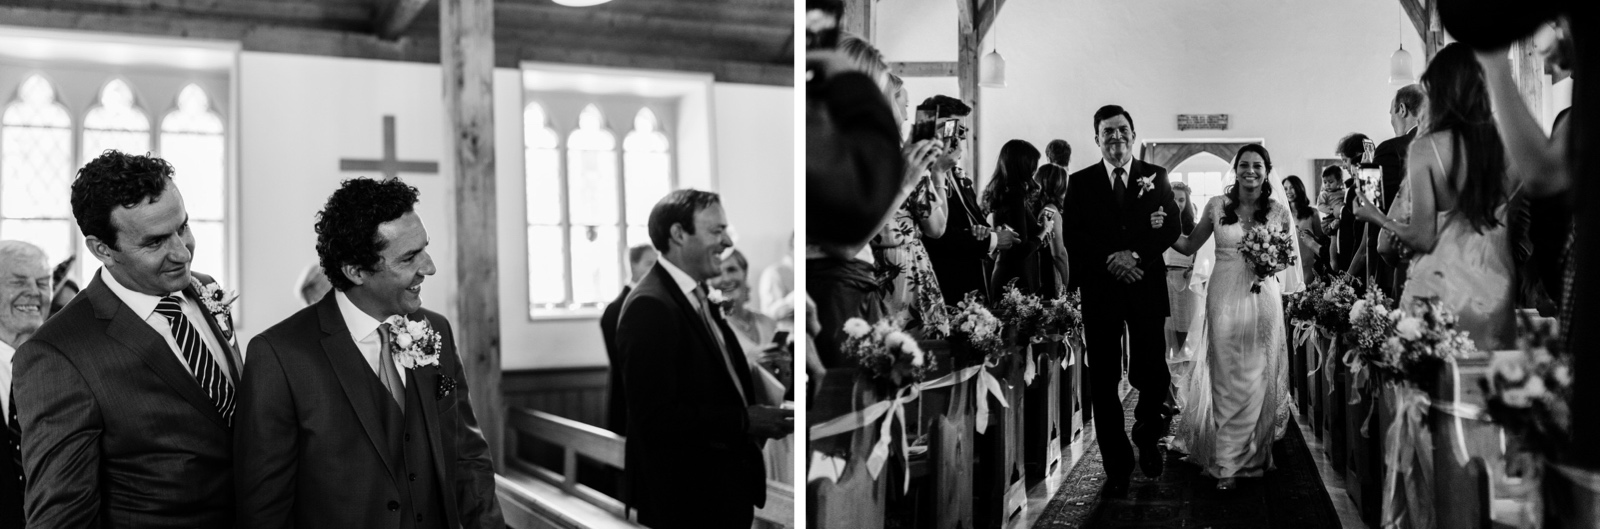 Fotomagoria Best 0f 2018 Wedding Photographer Italy81.jpg